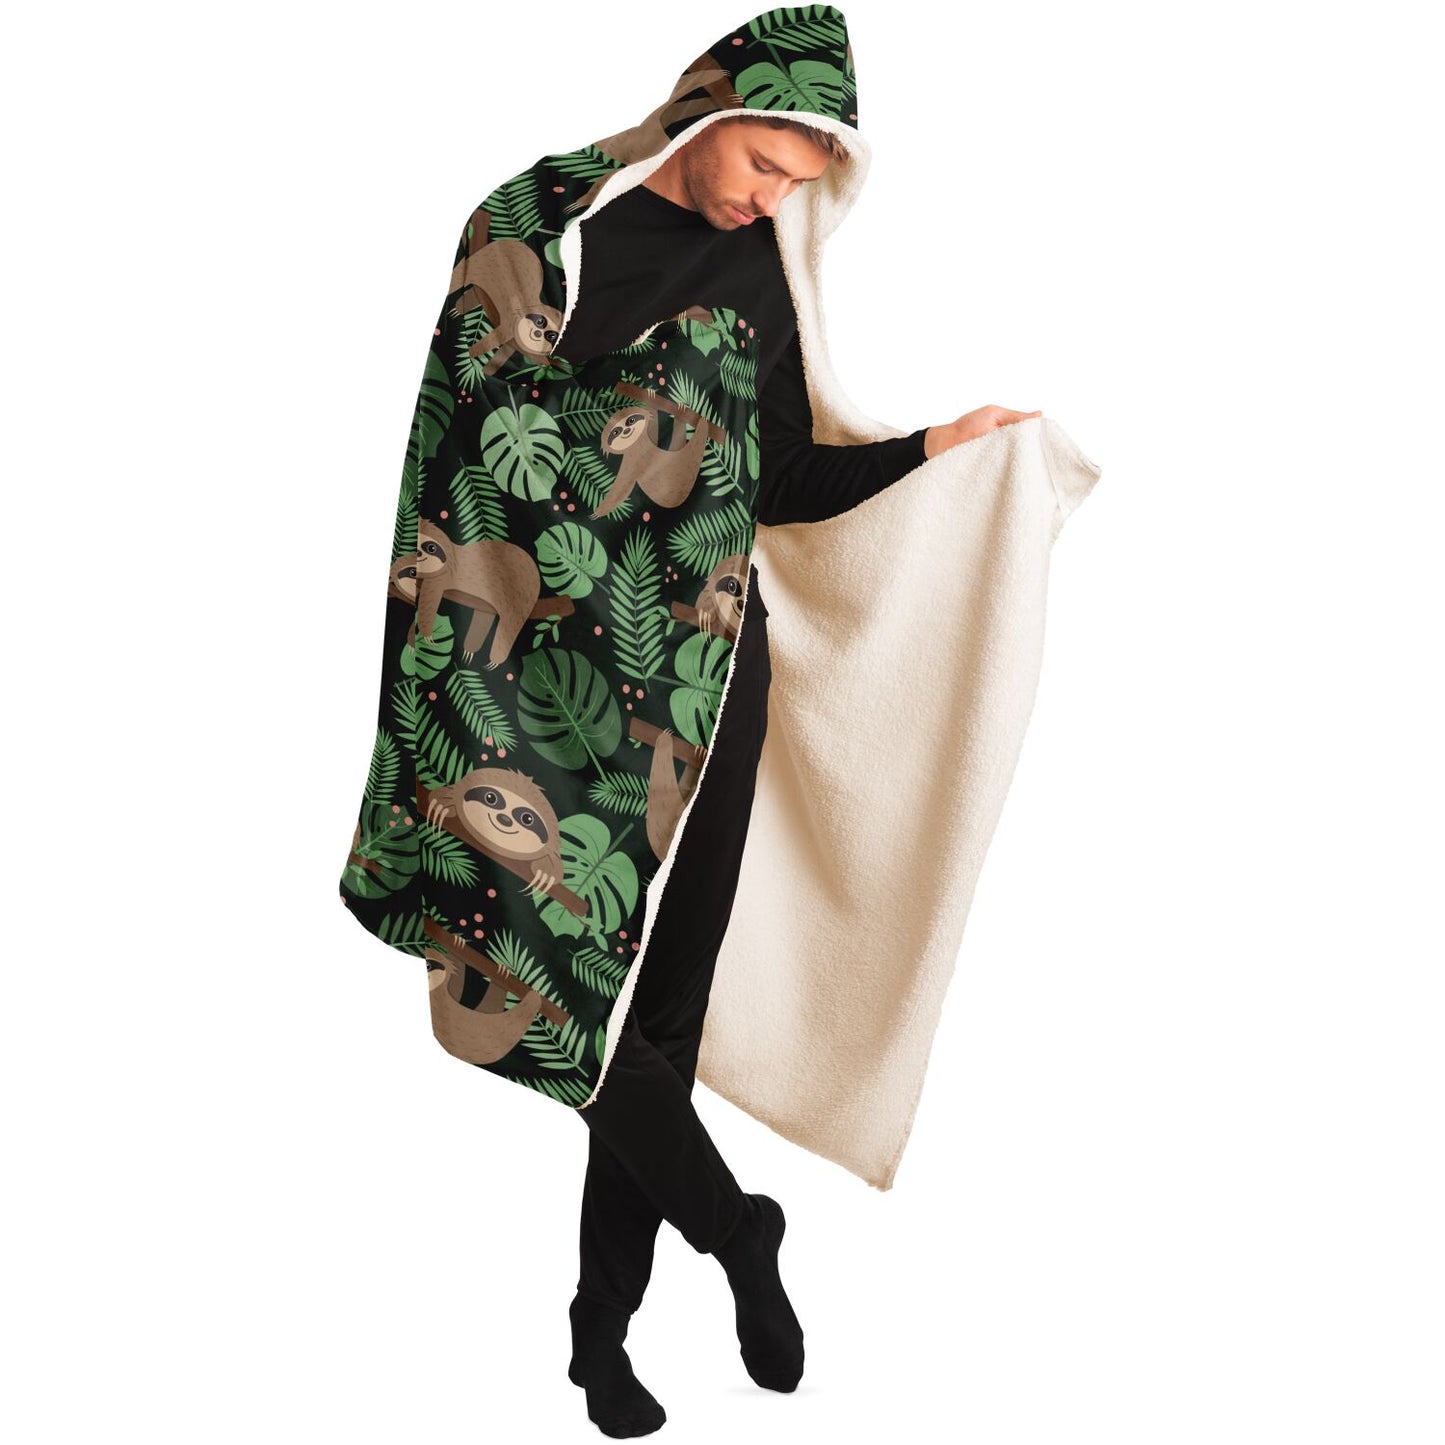 Sloth Green Hooded Blanket, Sleeping Animal Leaves Plants Cute Sherpa Fleece Soft Fluffy Cozy Warm Adult Men Women Kids Large Gift Starcove Fashion